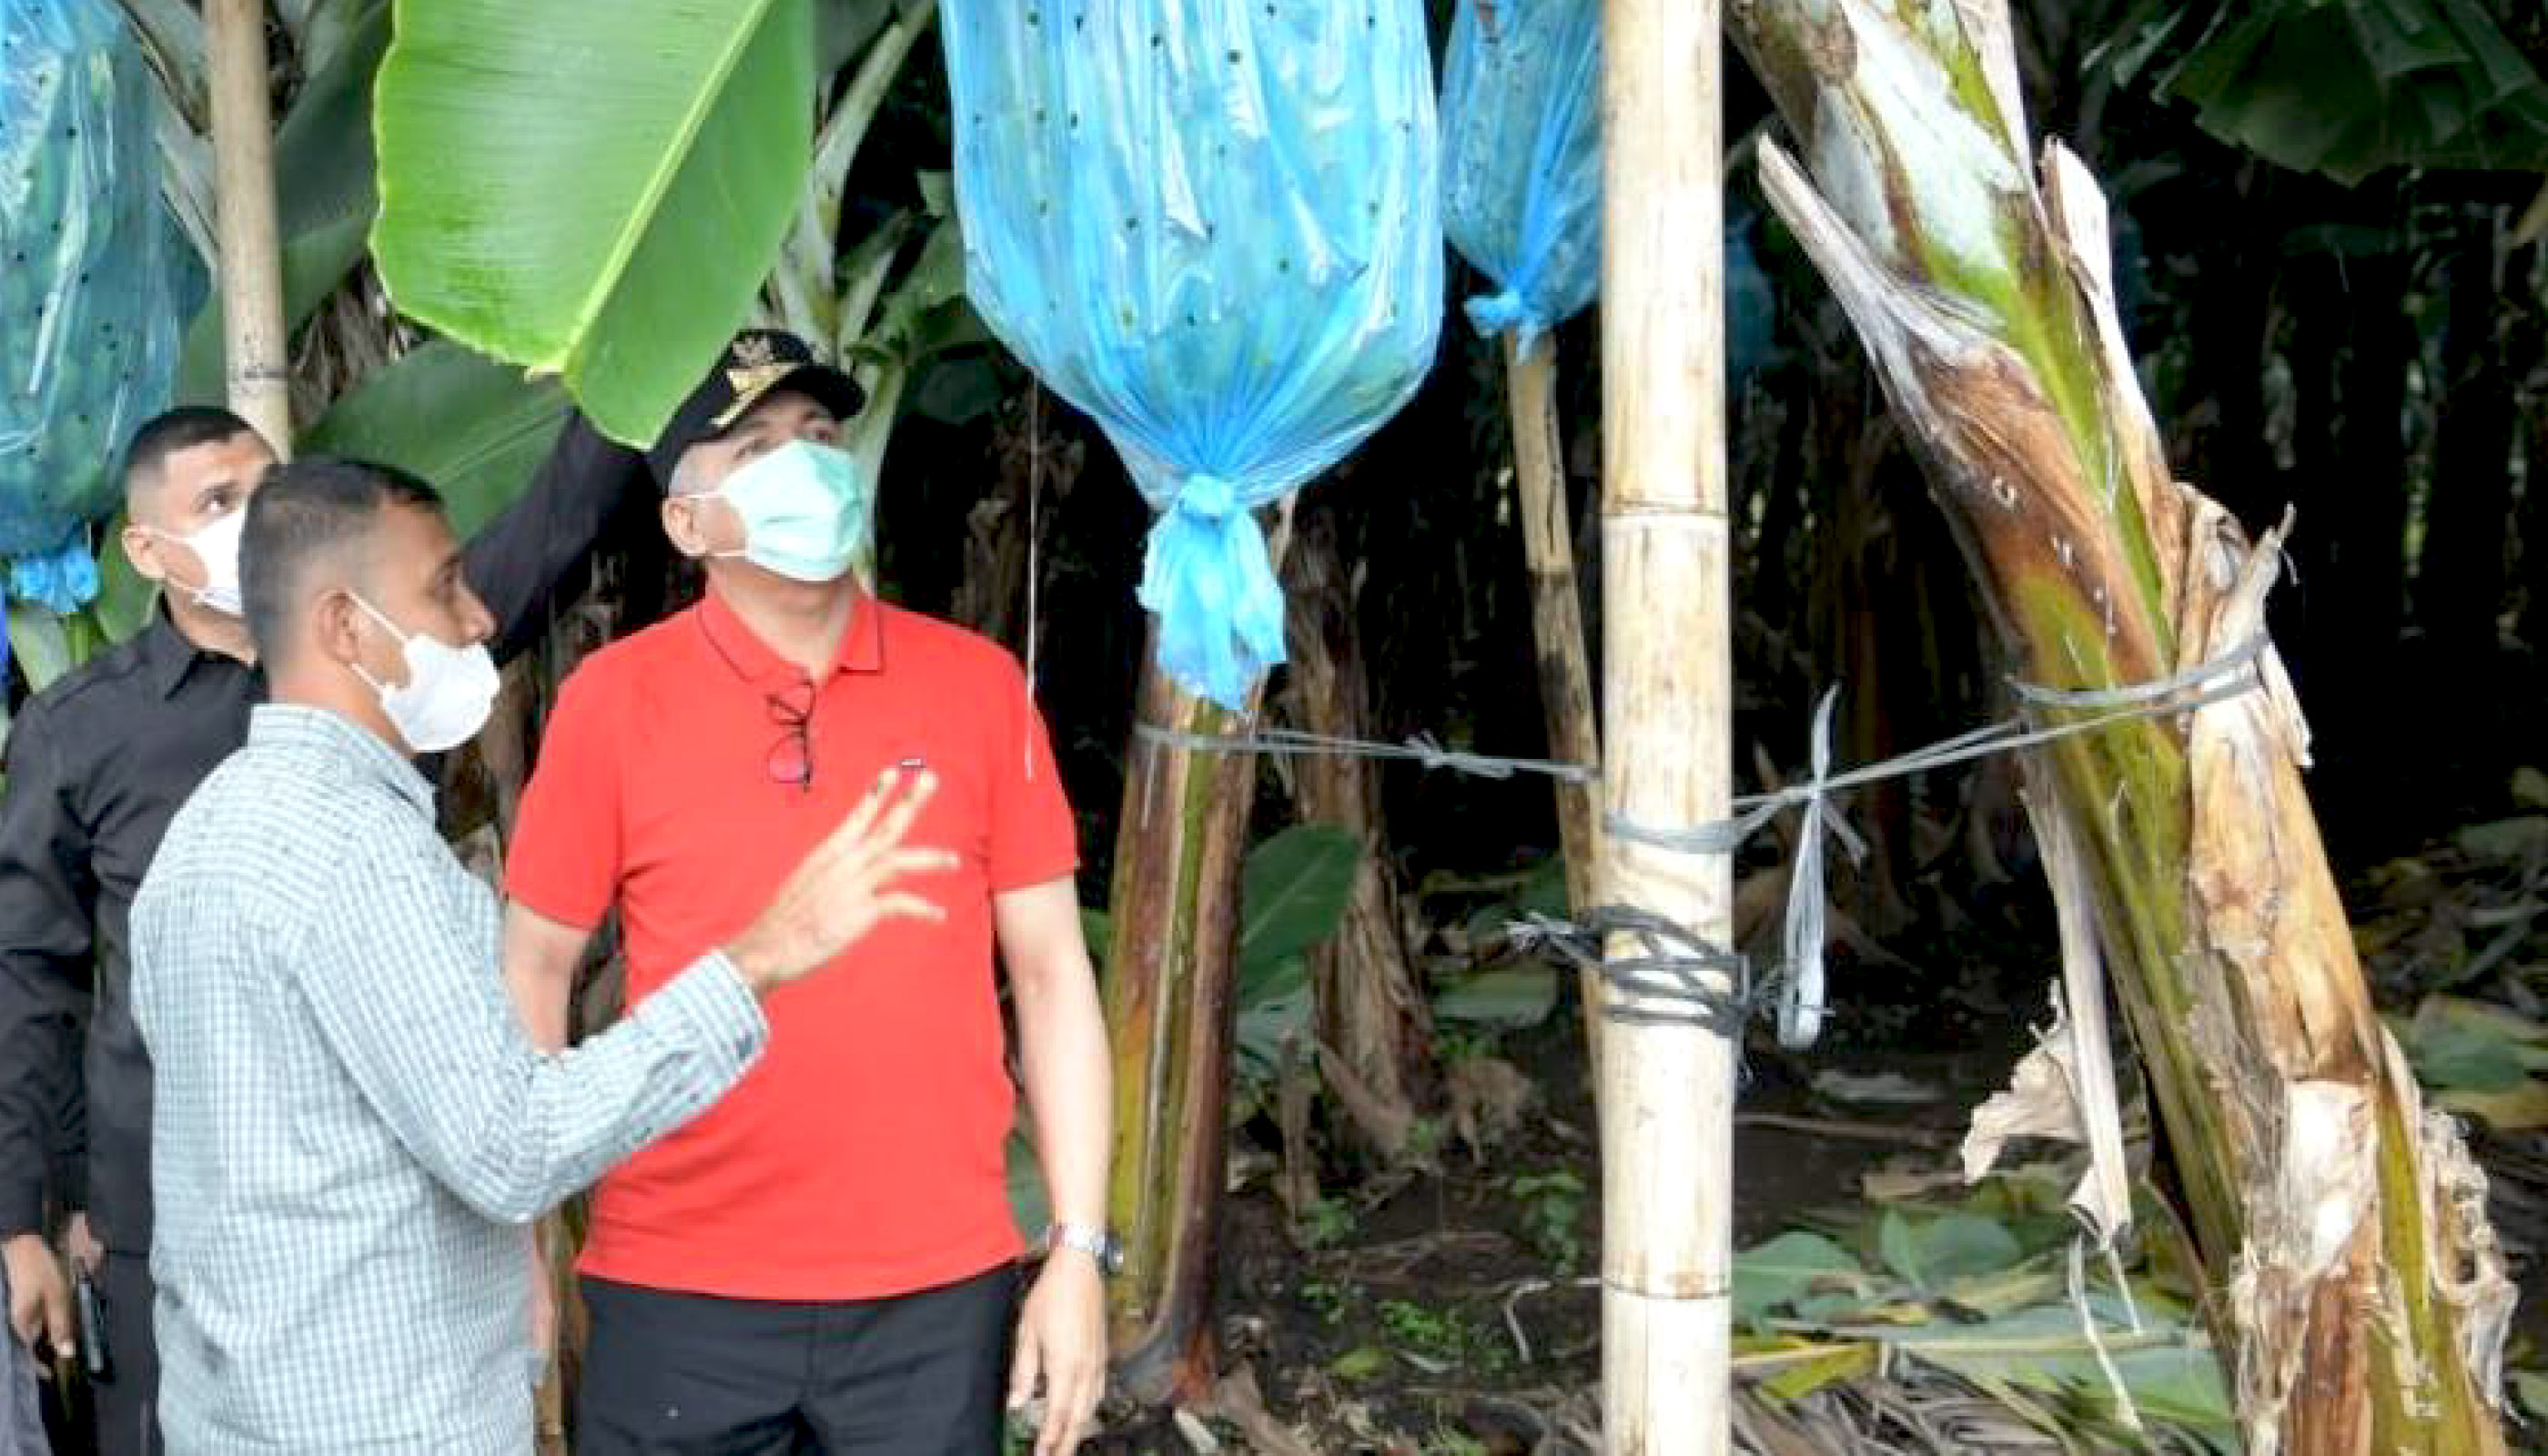 Aceh Governor Review Cavendish Banana Planting Land in Bener Meriah